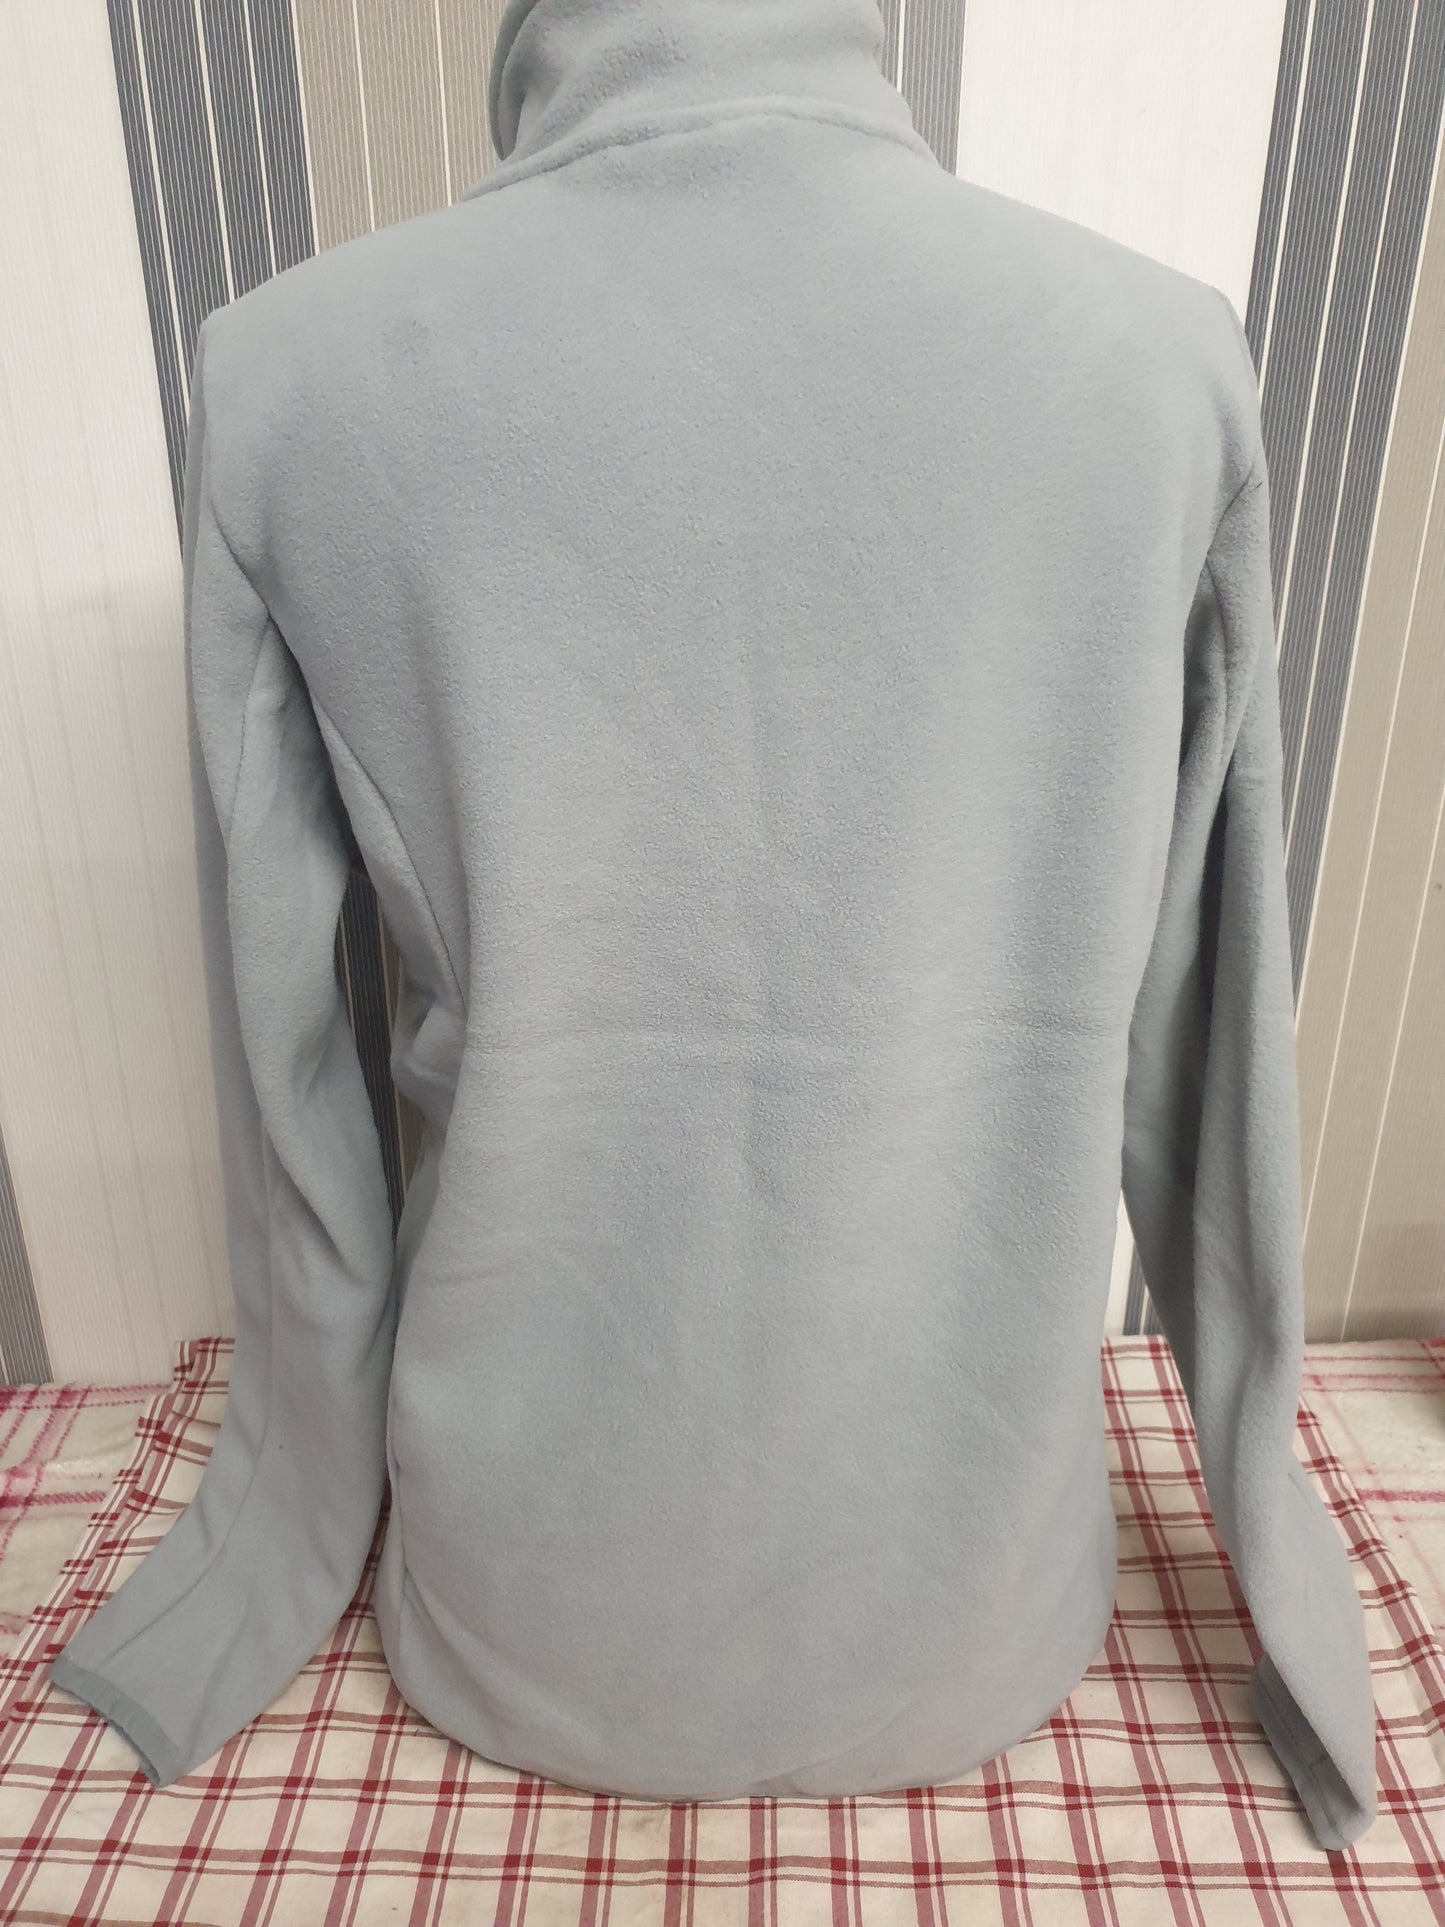 NEW WITH TAGS Stone Grey  HKM  fleece jacket  FREE POSTAGE 🟢